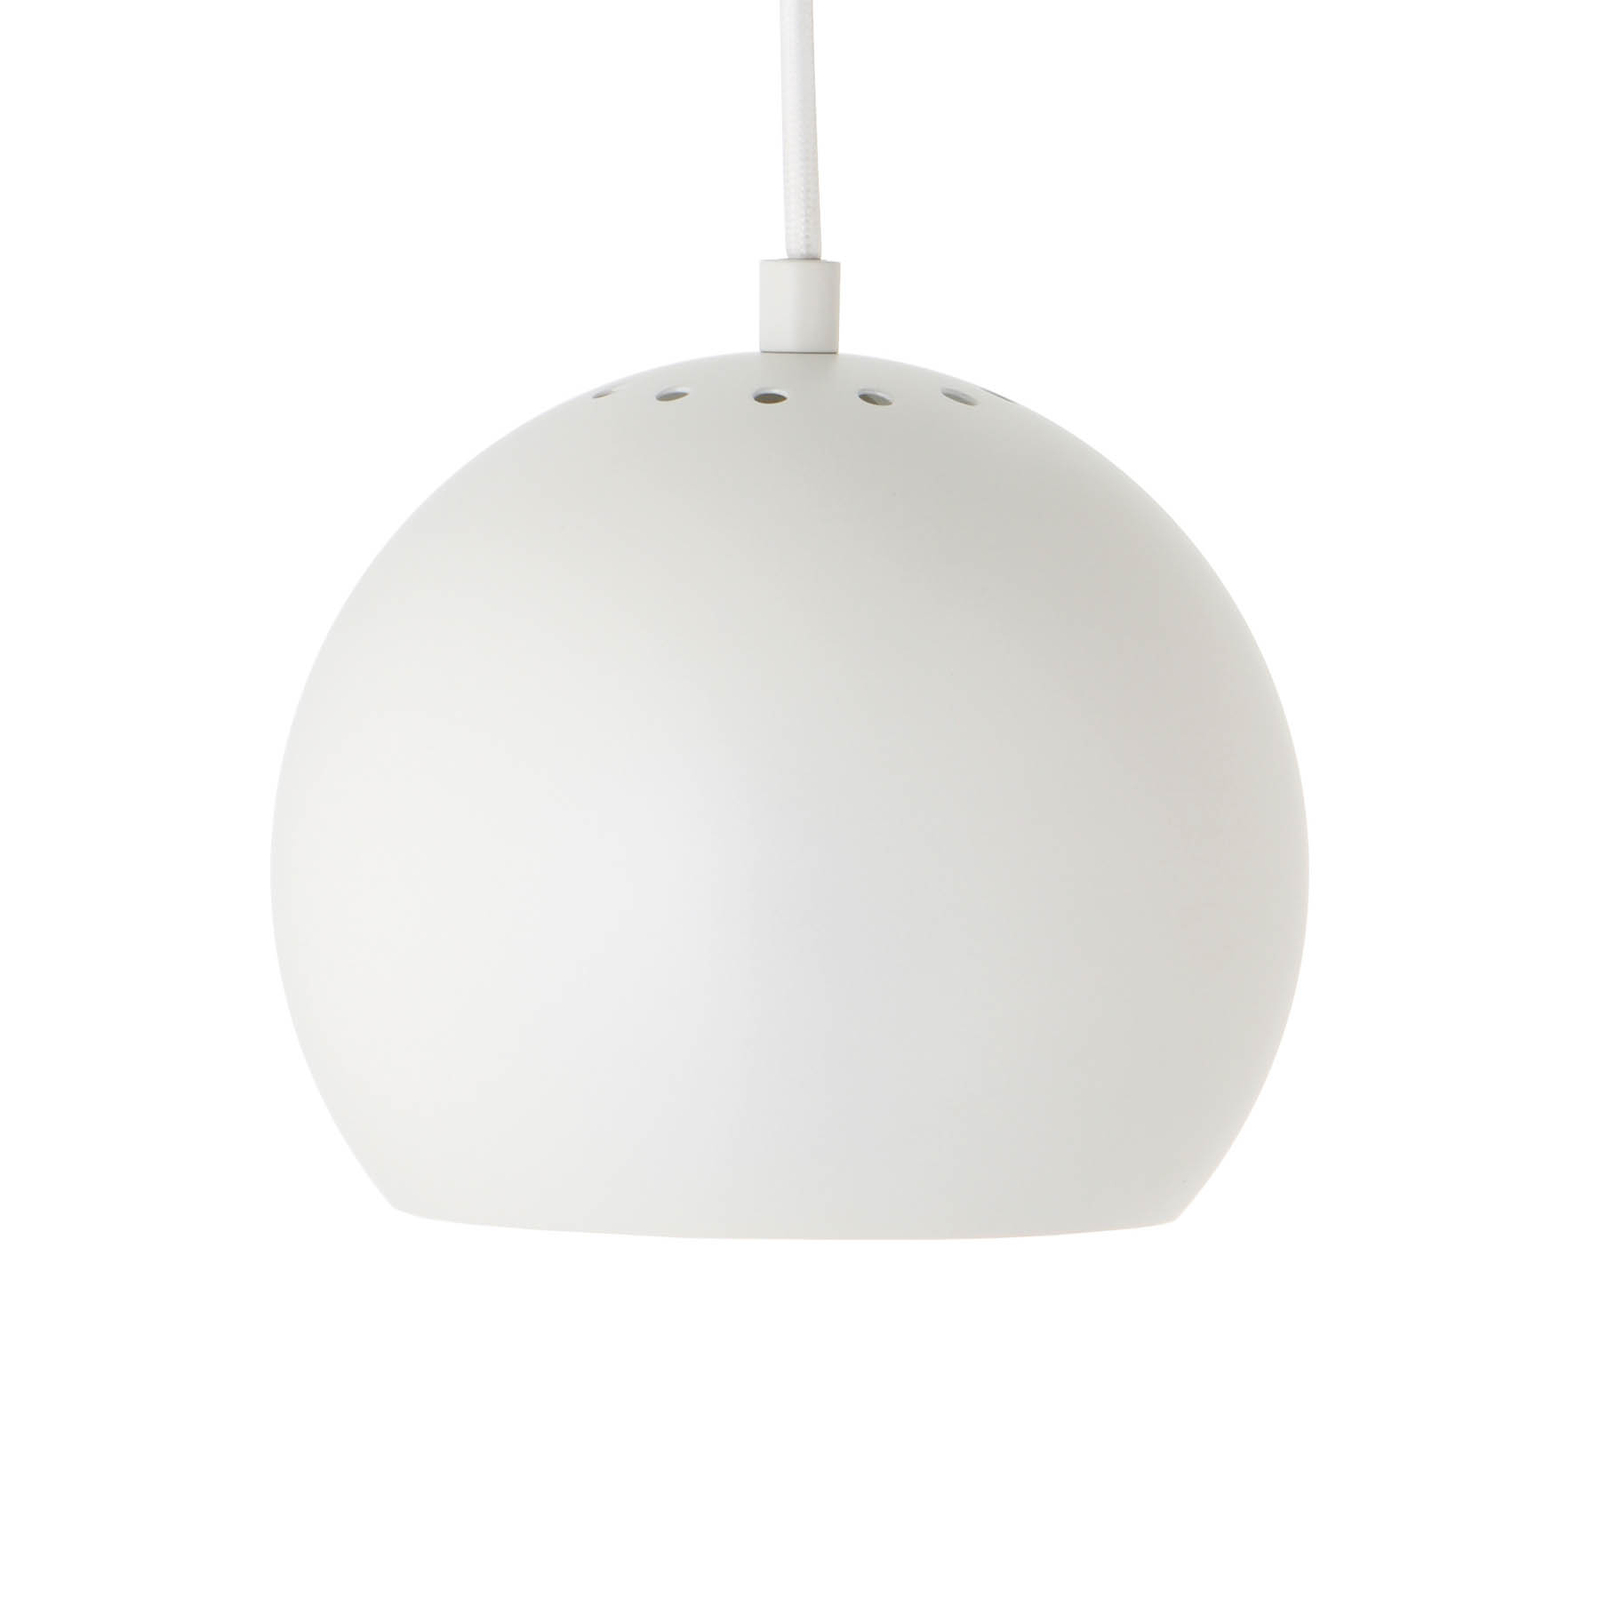 FRANDSEN Ball lámpara colgante Ø 18 cm blanco mate